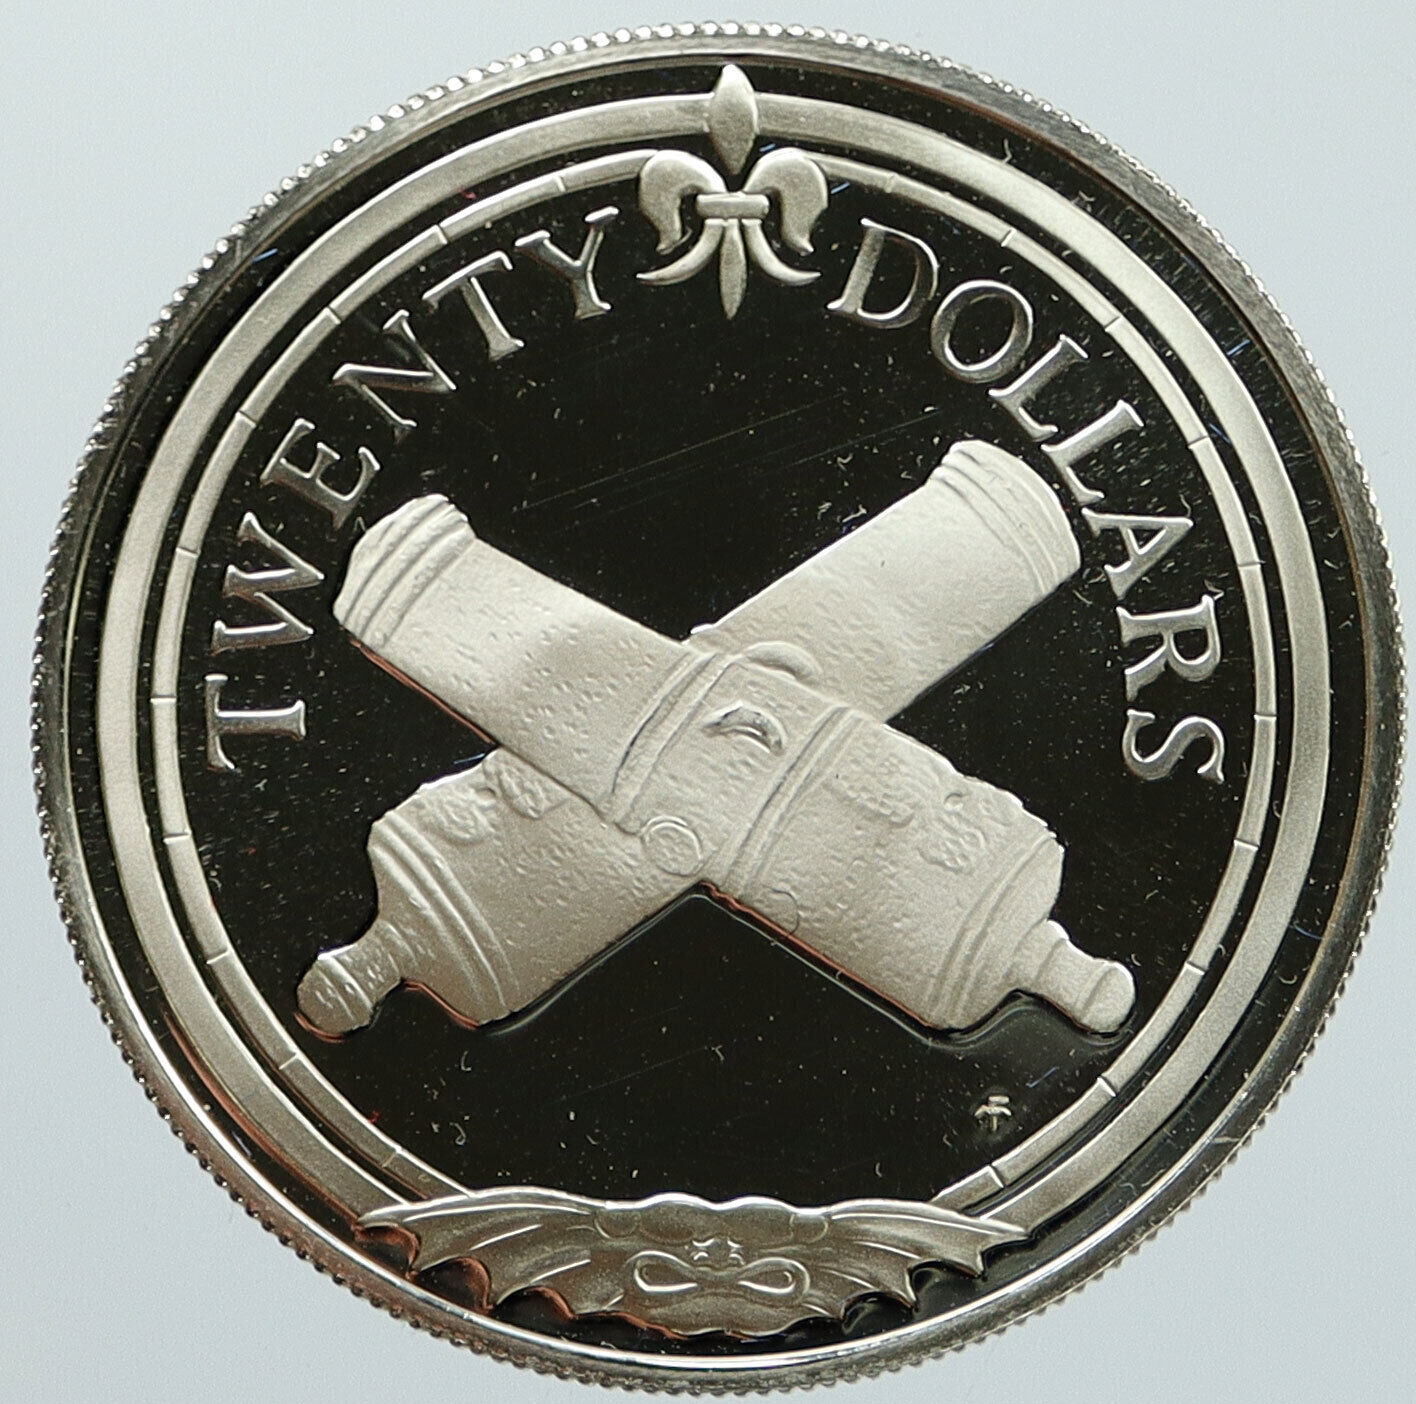 1985 British Virgin Islands CARIBBEAN TREASURE Old Proof Silver $20 Coin i116855